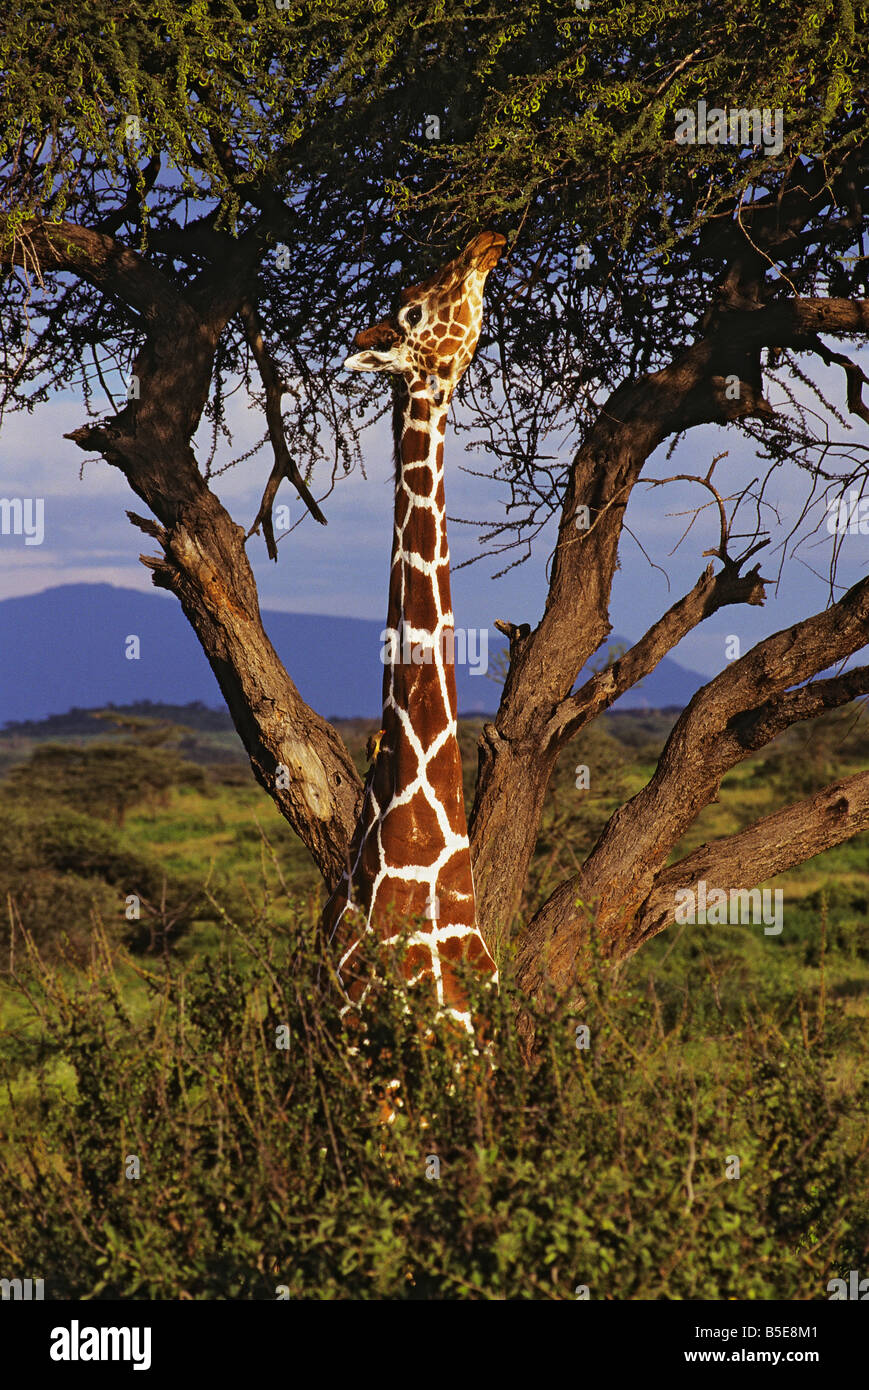 Giraffe Using its Long Neck in an Acacia Tree Stock Photo